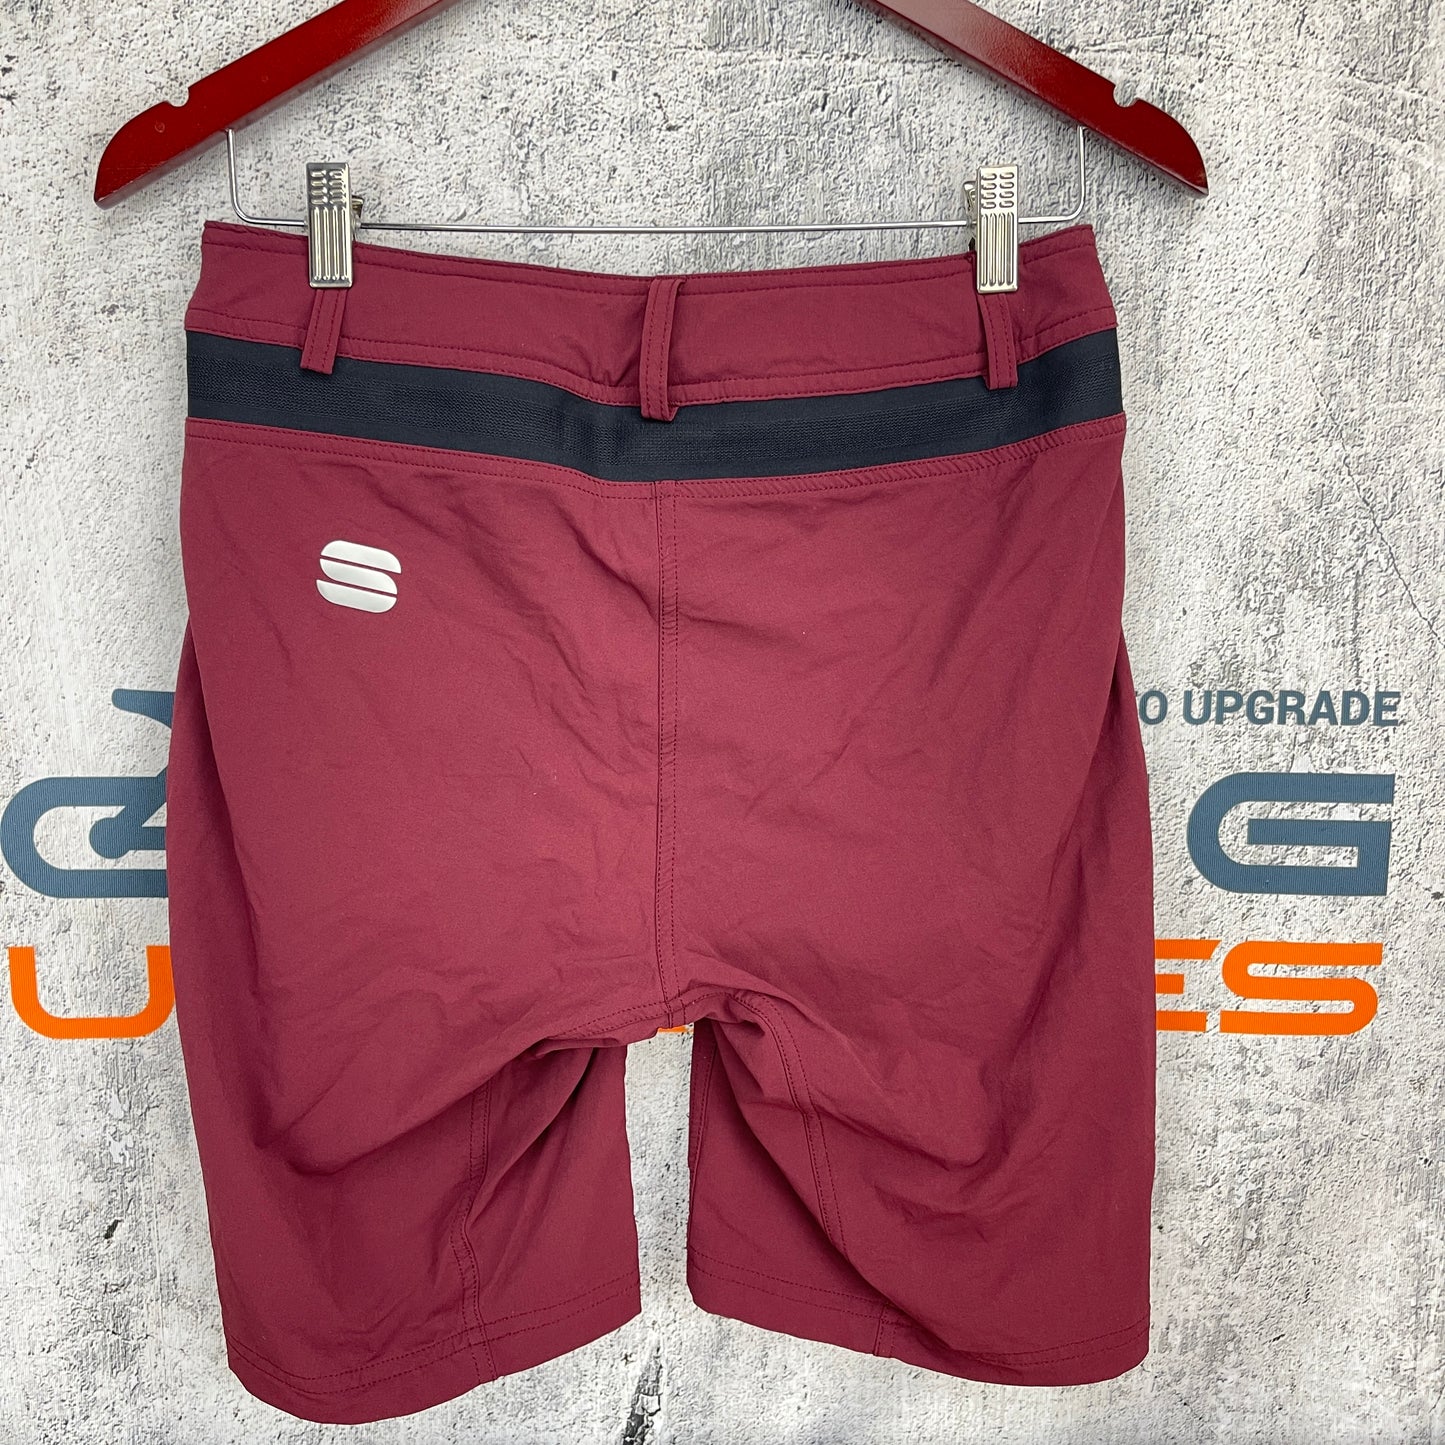 Light Use! Sportful Giara Red Wine Color Men's Small MTB Mountain Bike Shorts